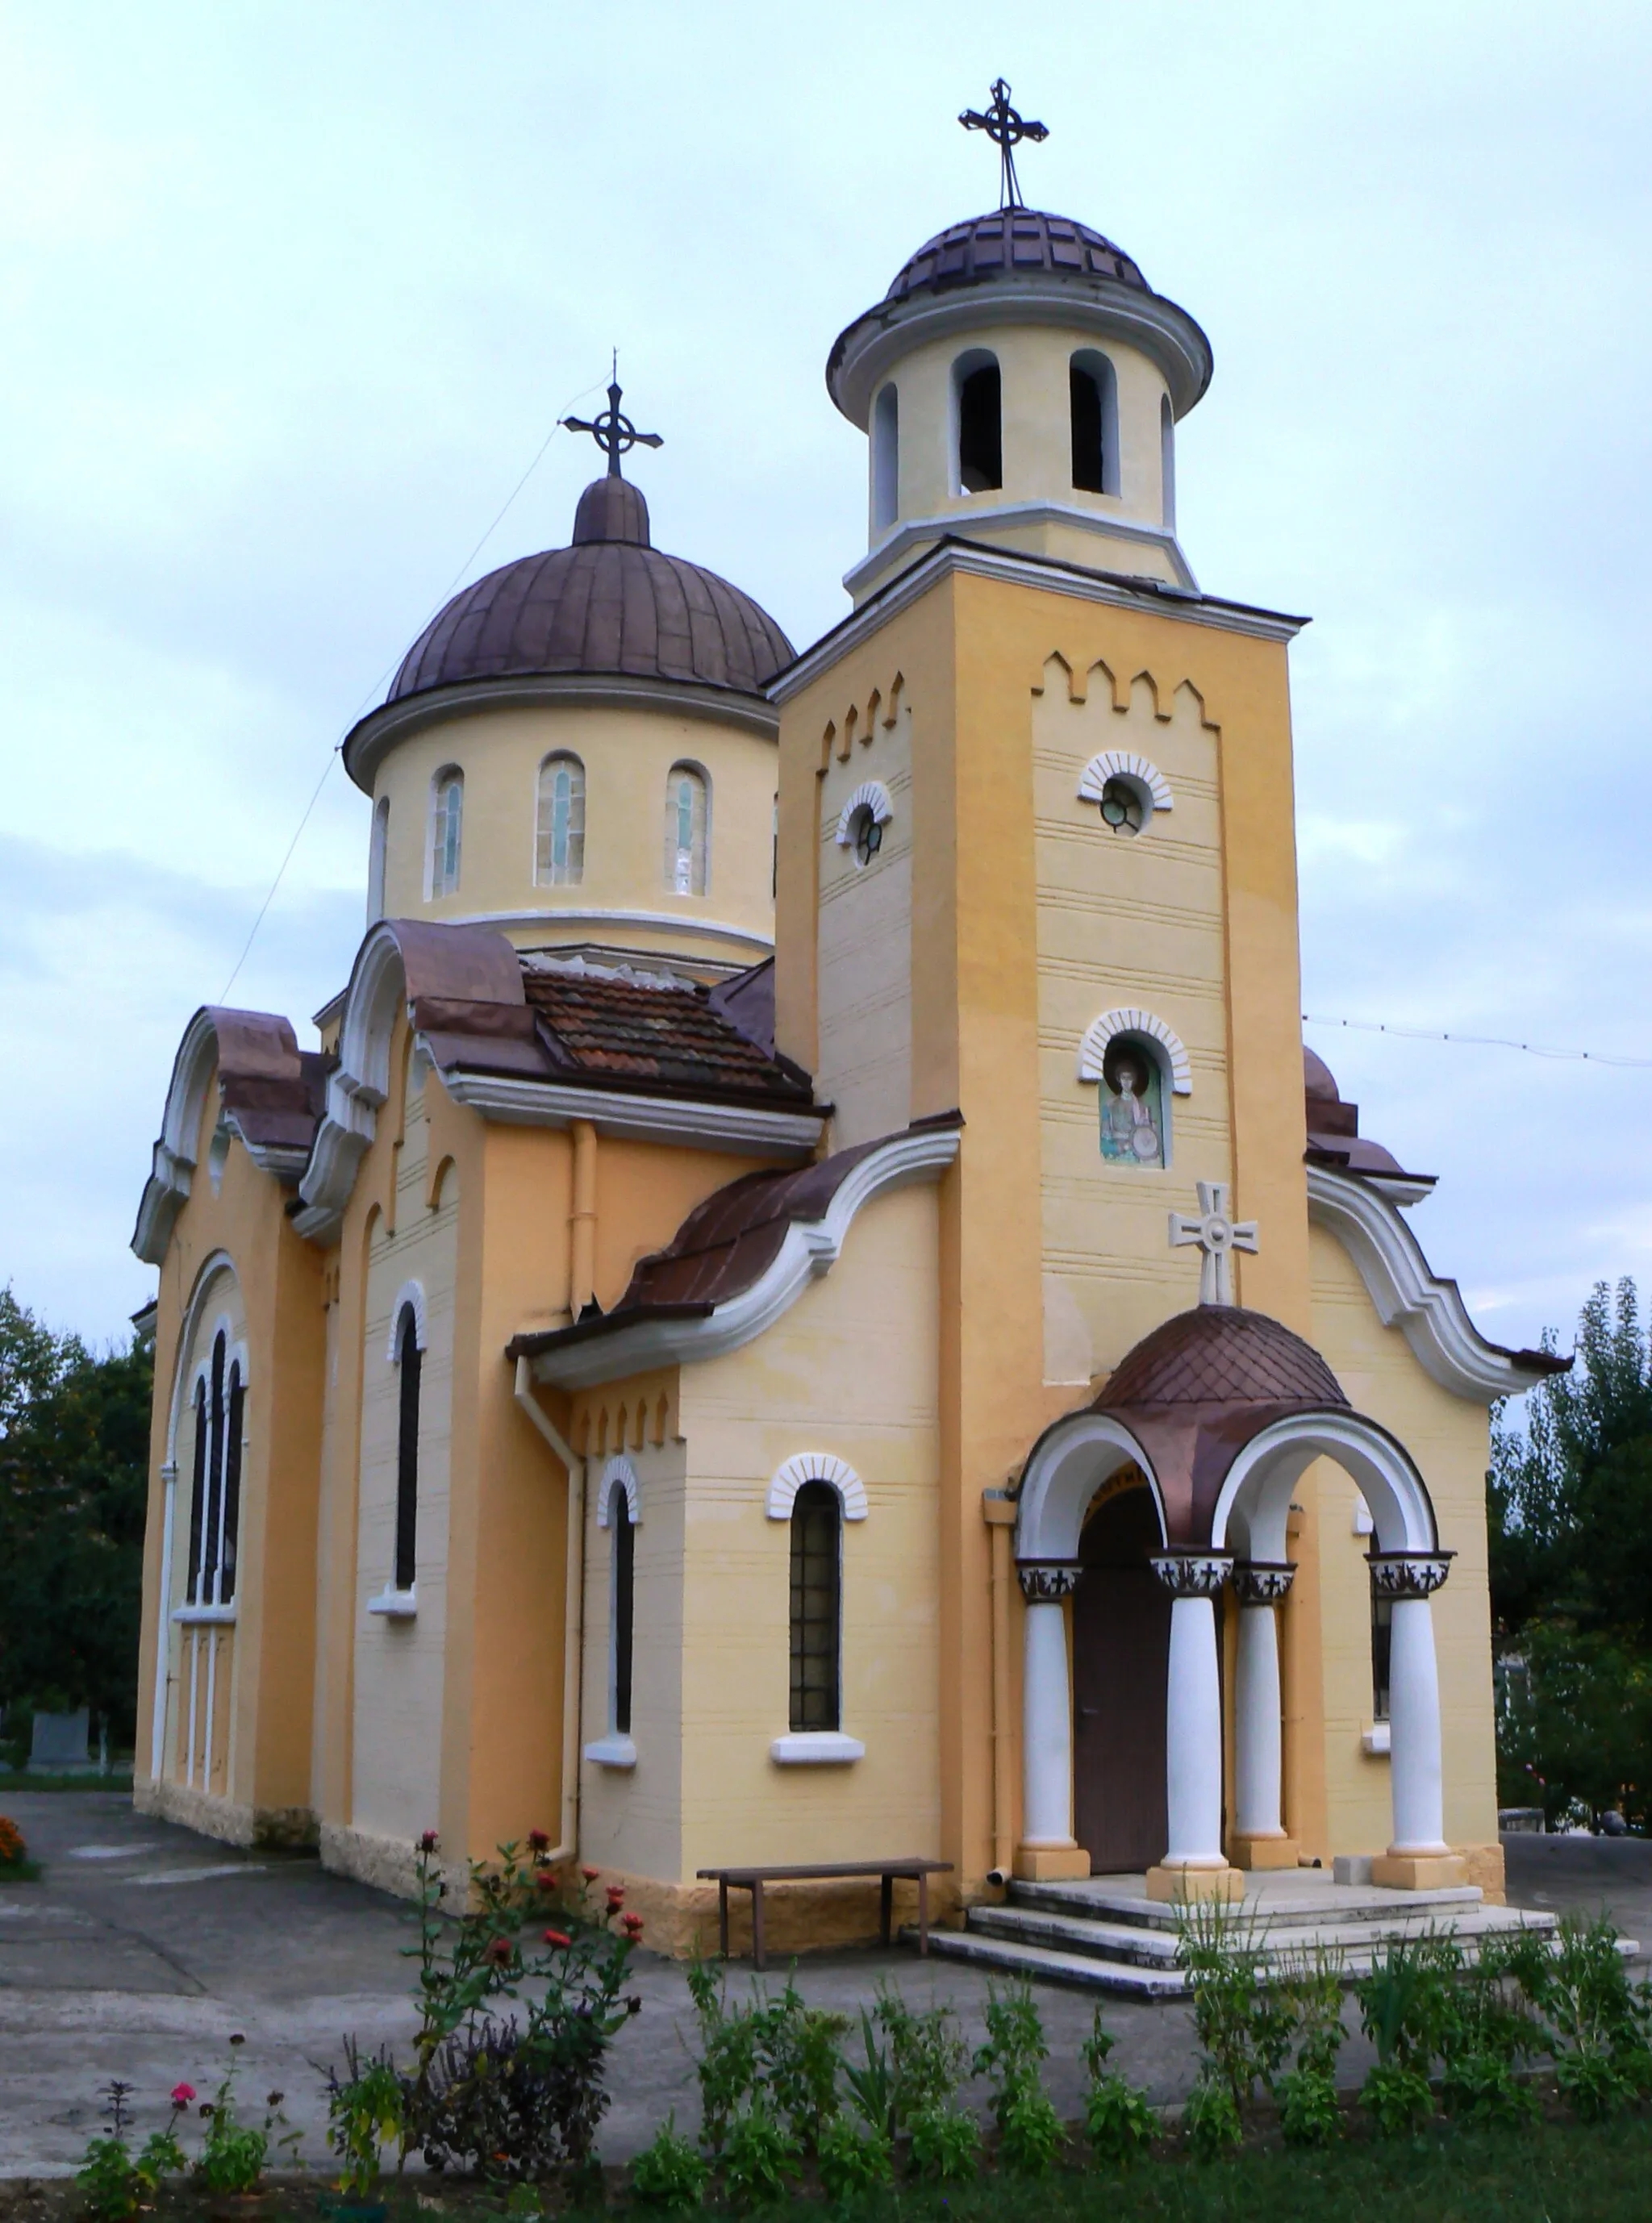 Photo showing: The church "Saint George" in Mezdra, Bulgaria